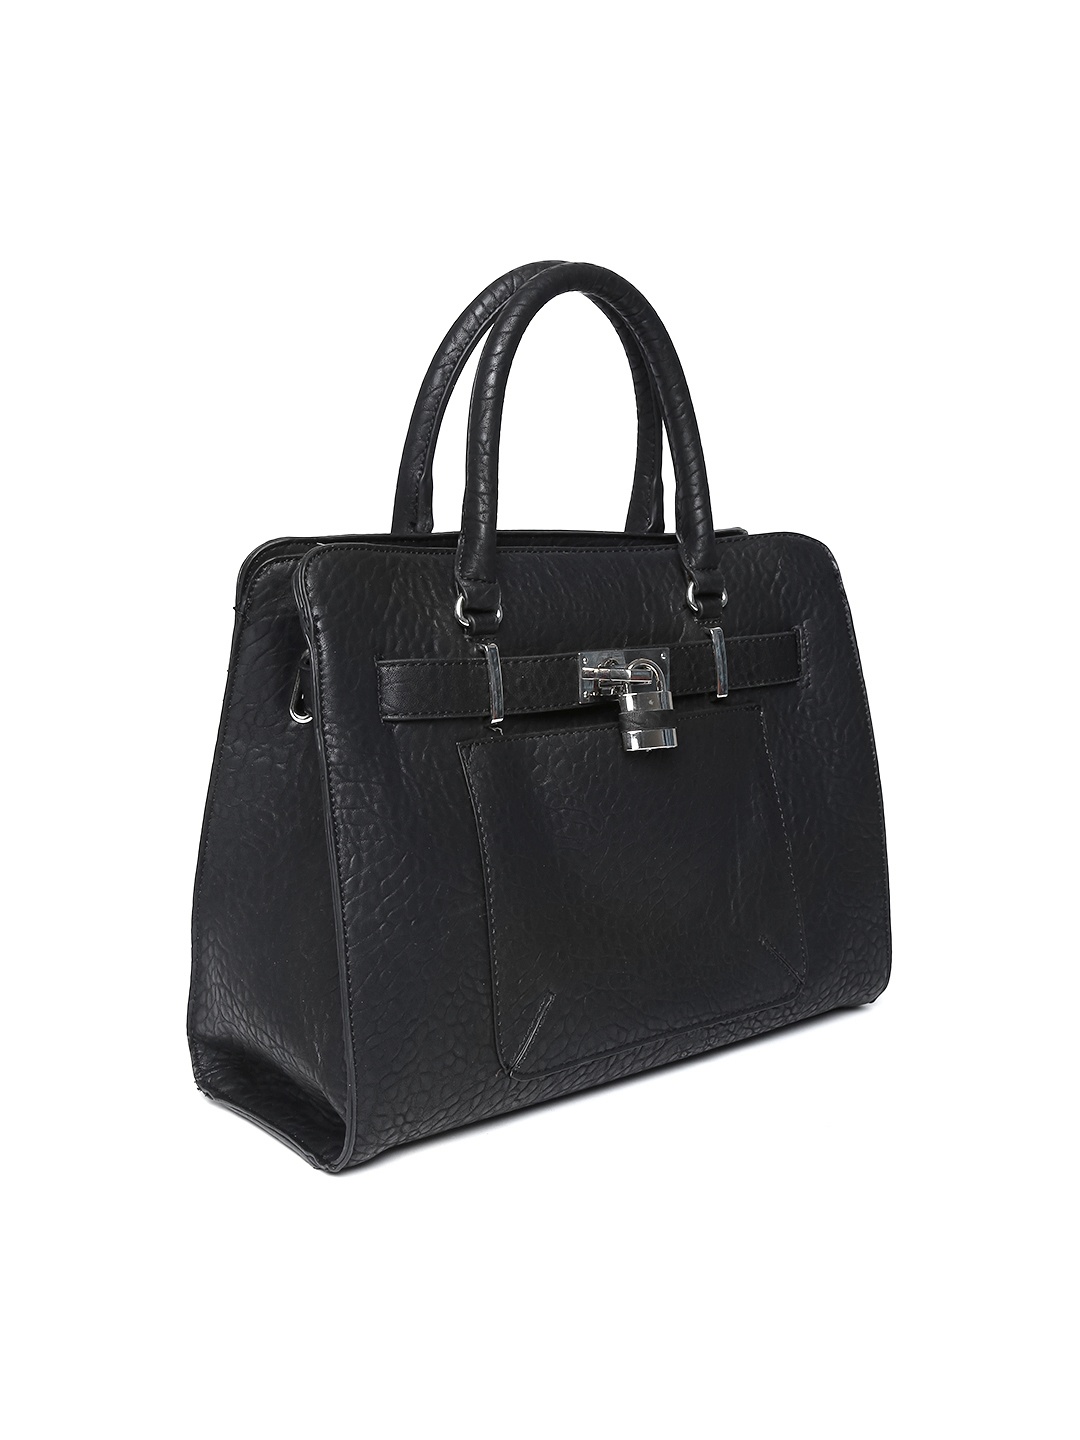 Myntra Parfois Black Handbag 639686 | Buy Myntra Parfois Handbags at ...